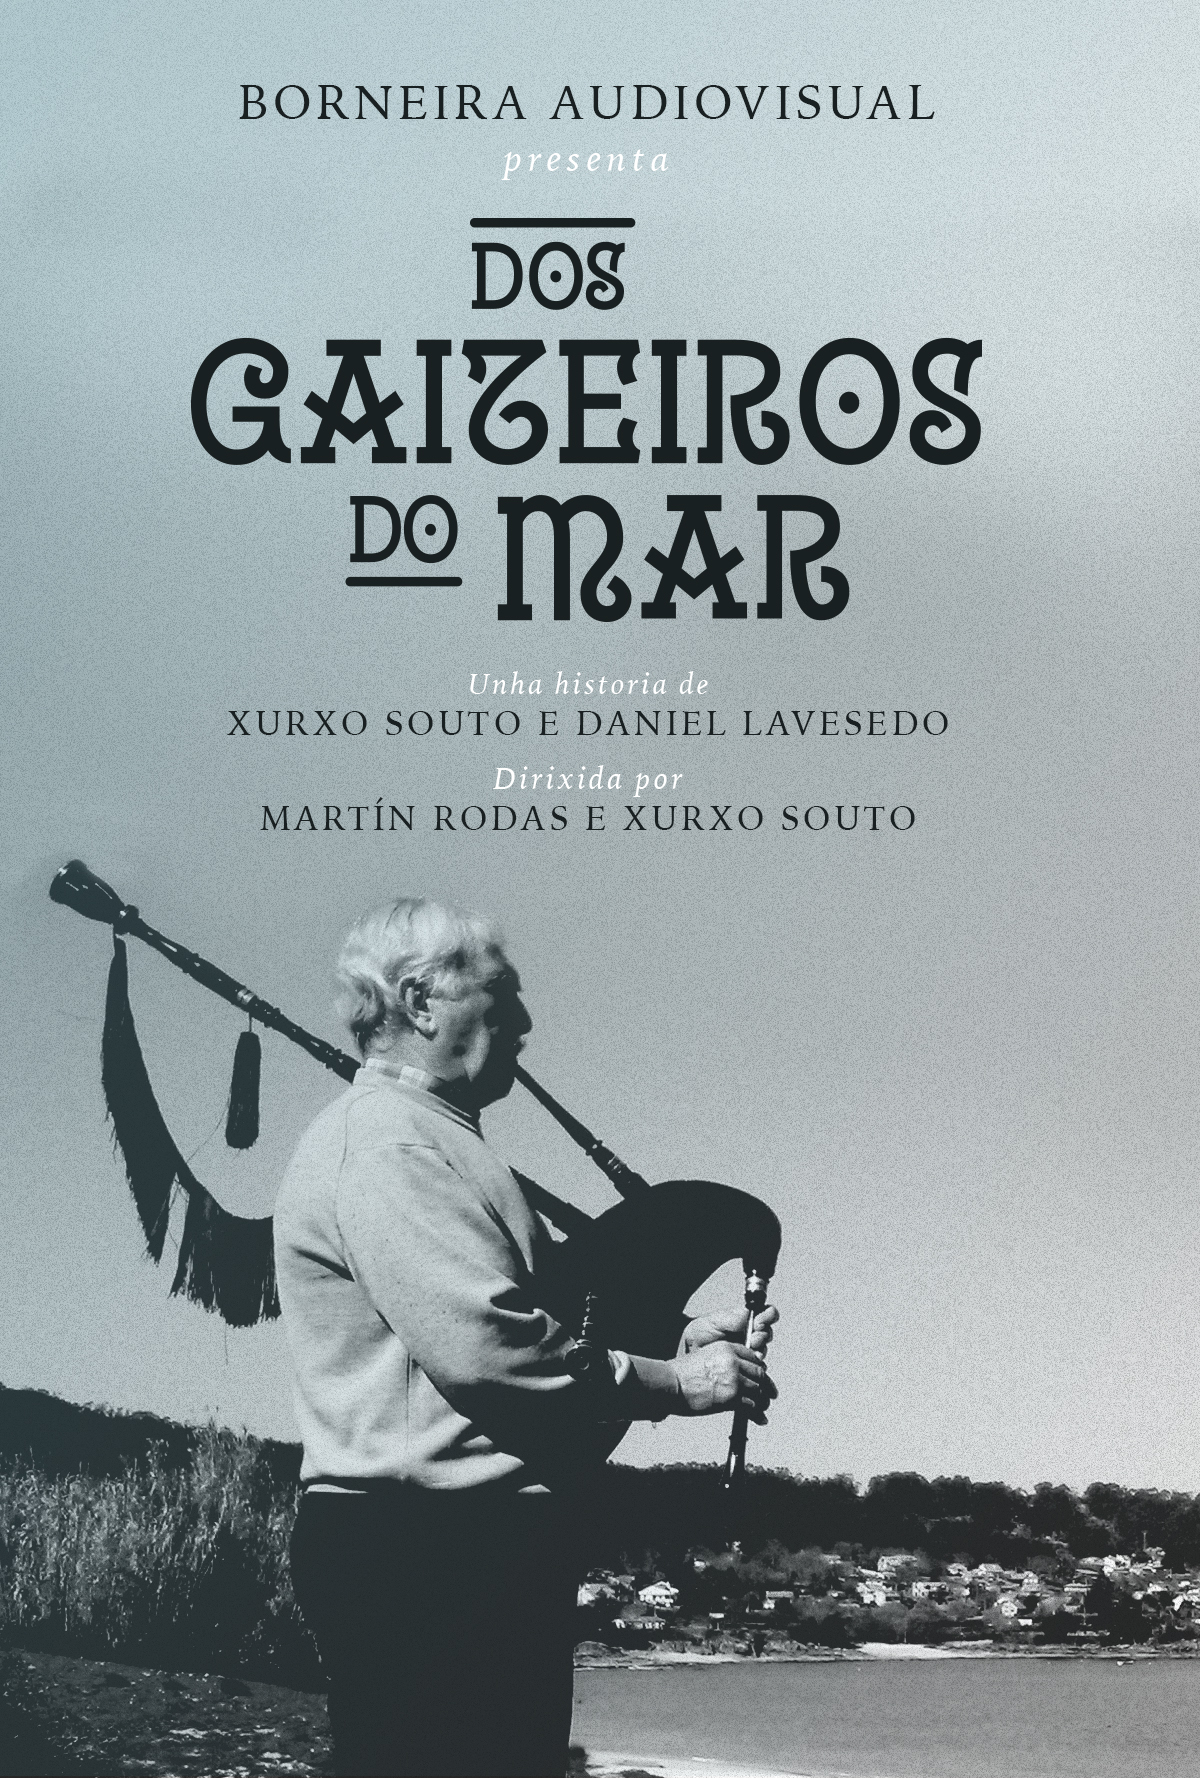 Documentary  Galicia gaiteiros gaita borneira